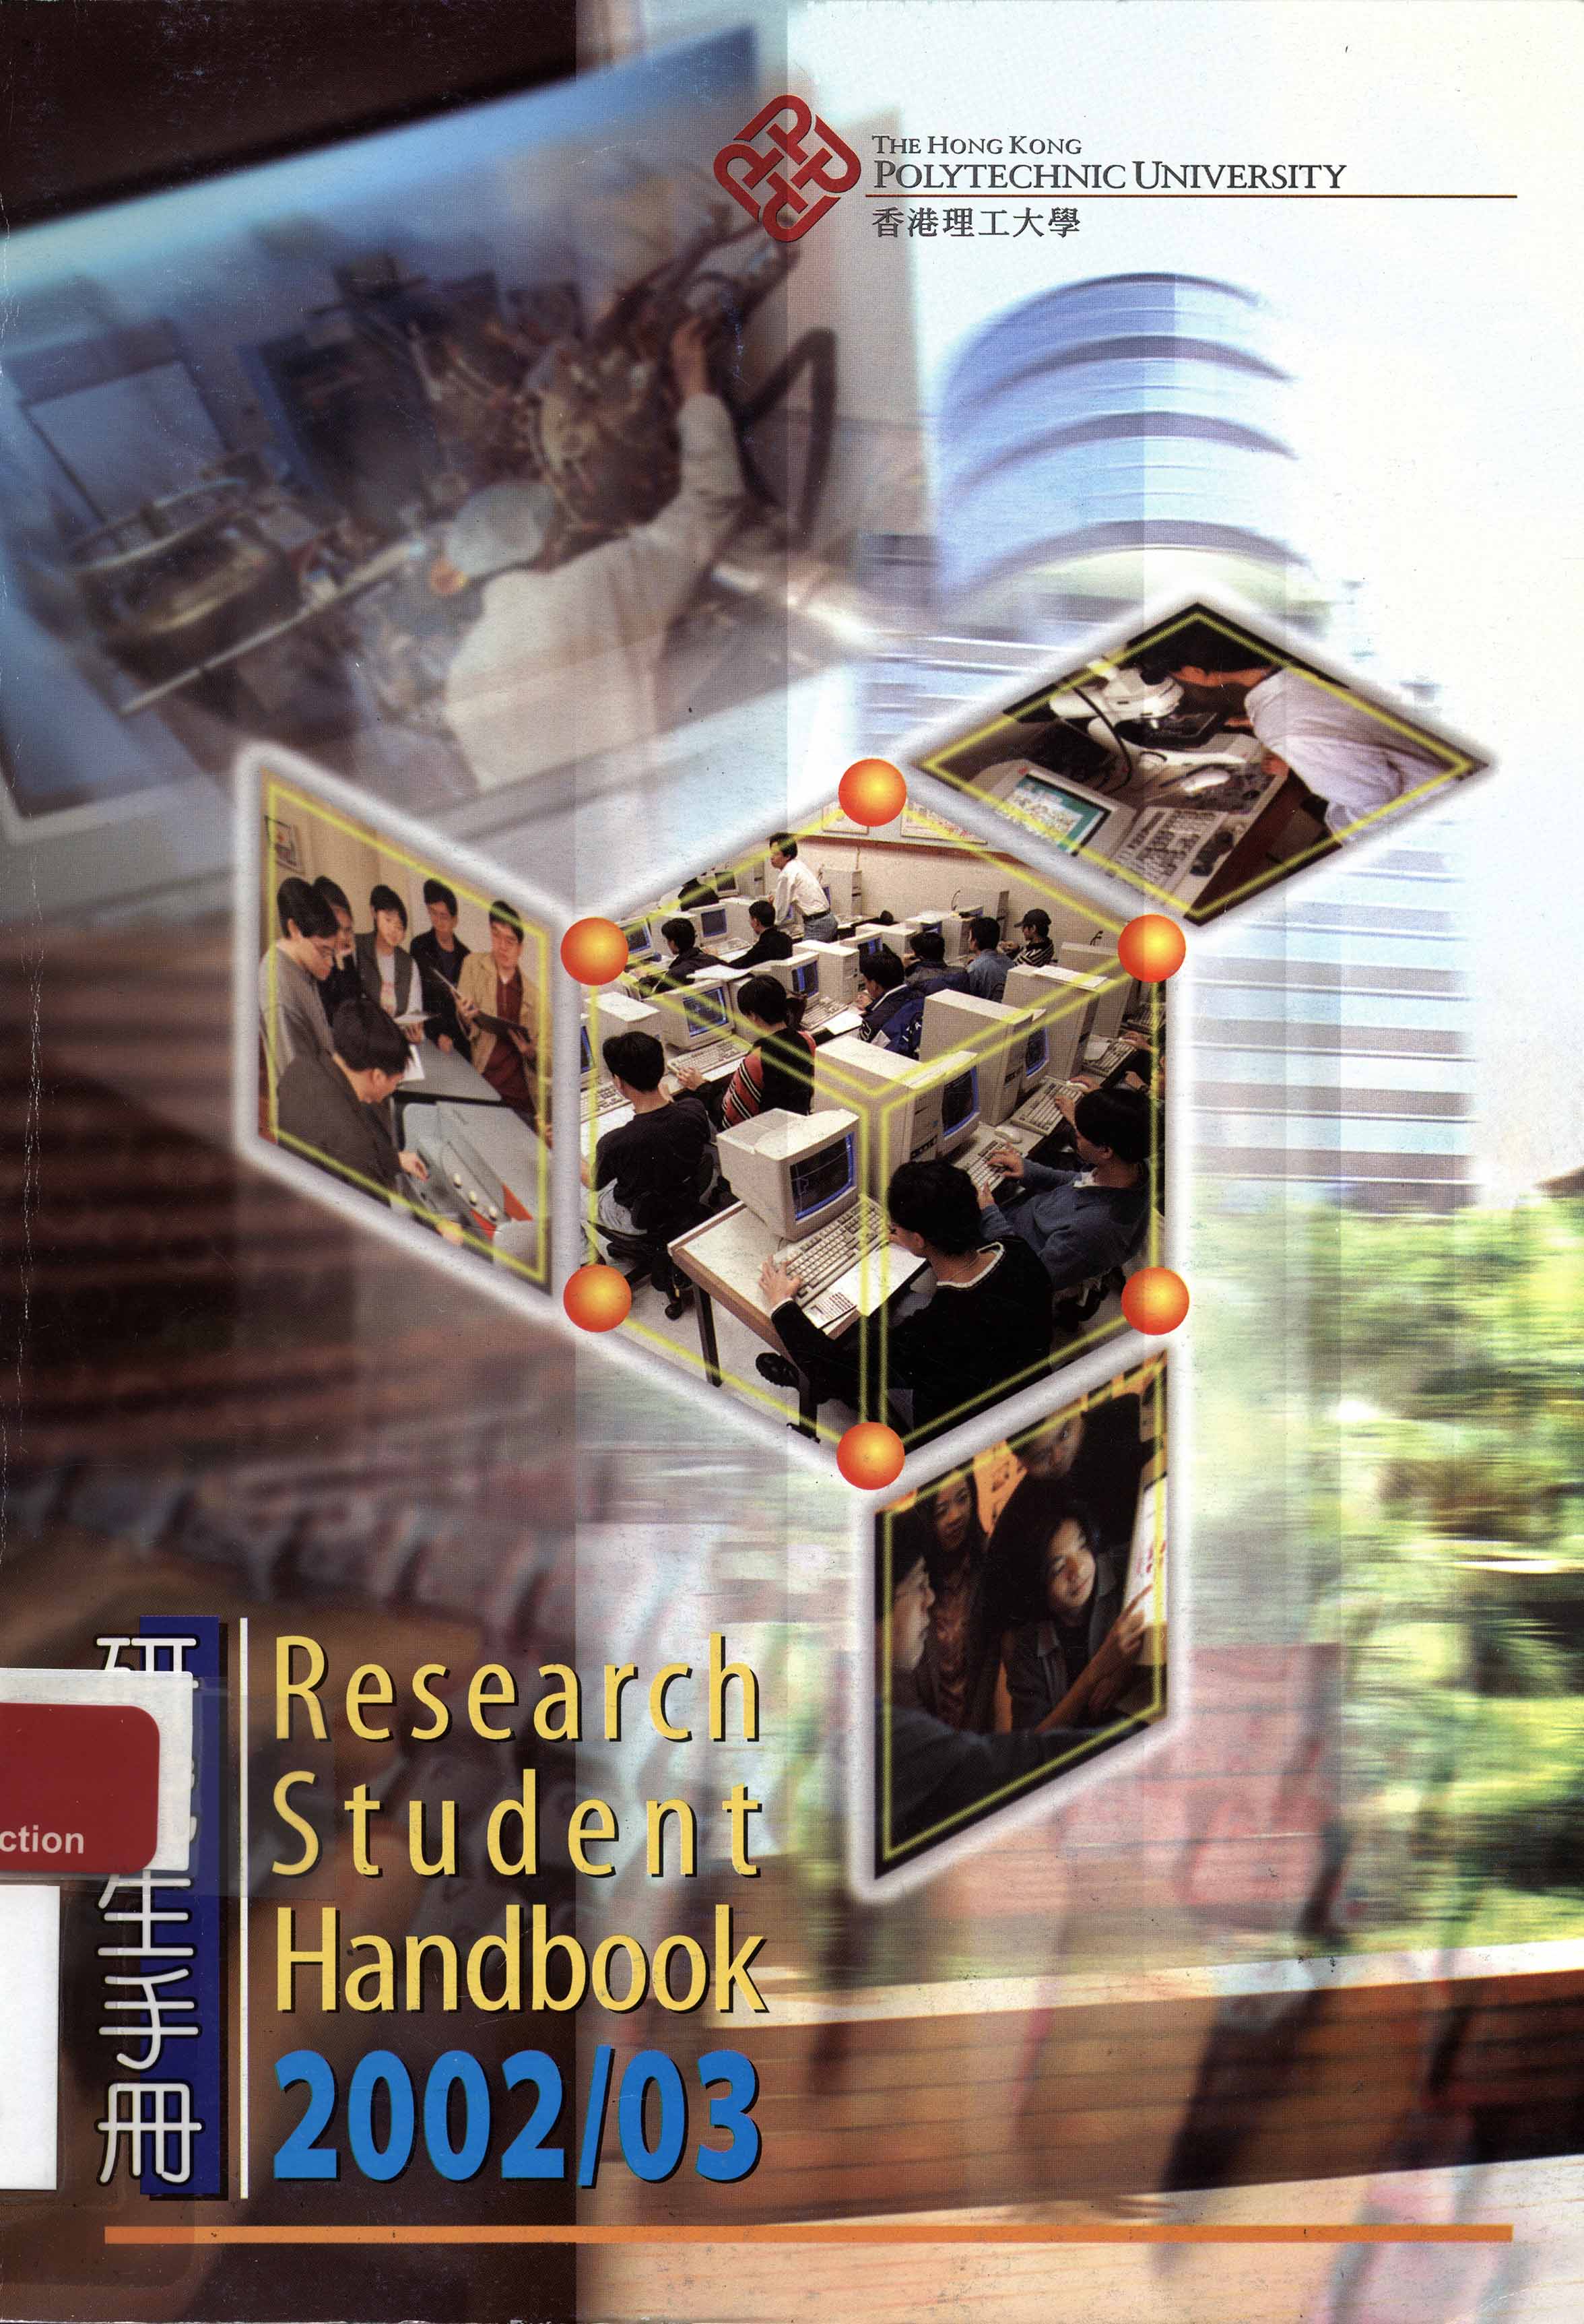 Research student handbook 2002/03